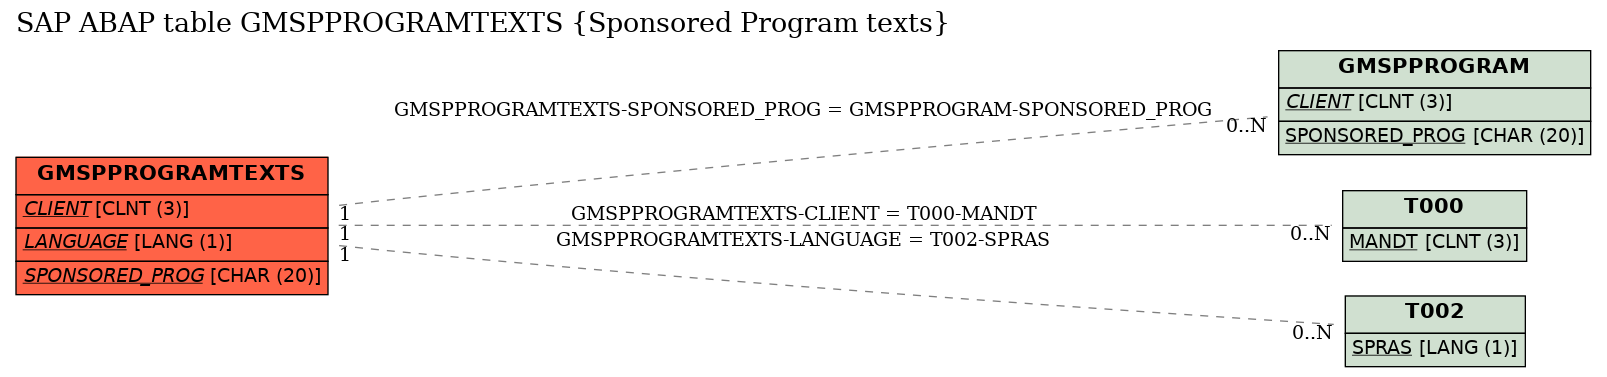 E-R Diagram for table GMSPPROGRAMTEXTS (Sponsored Program texts)